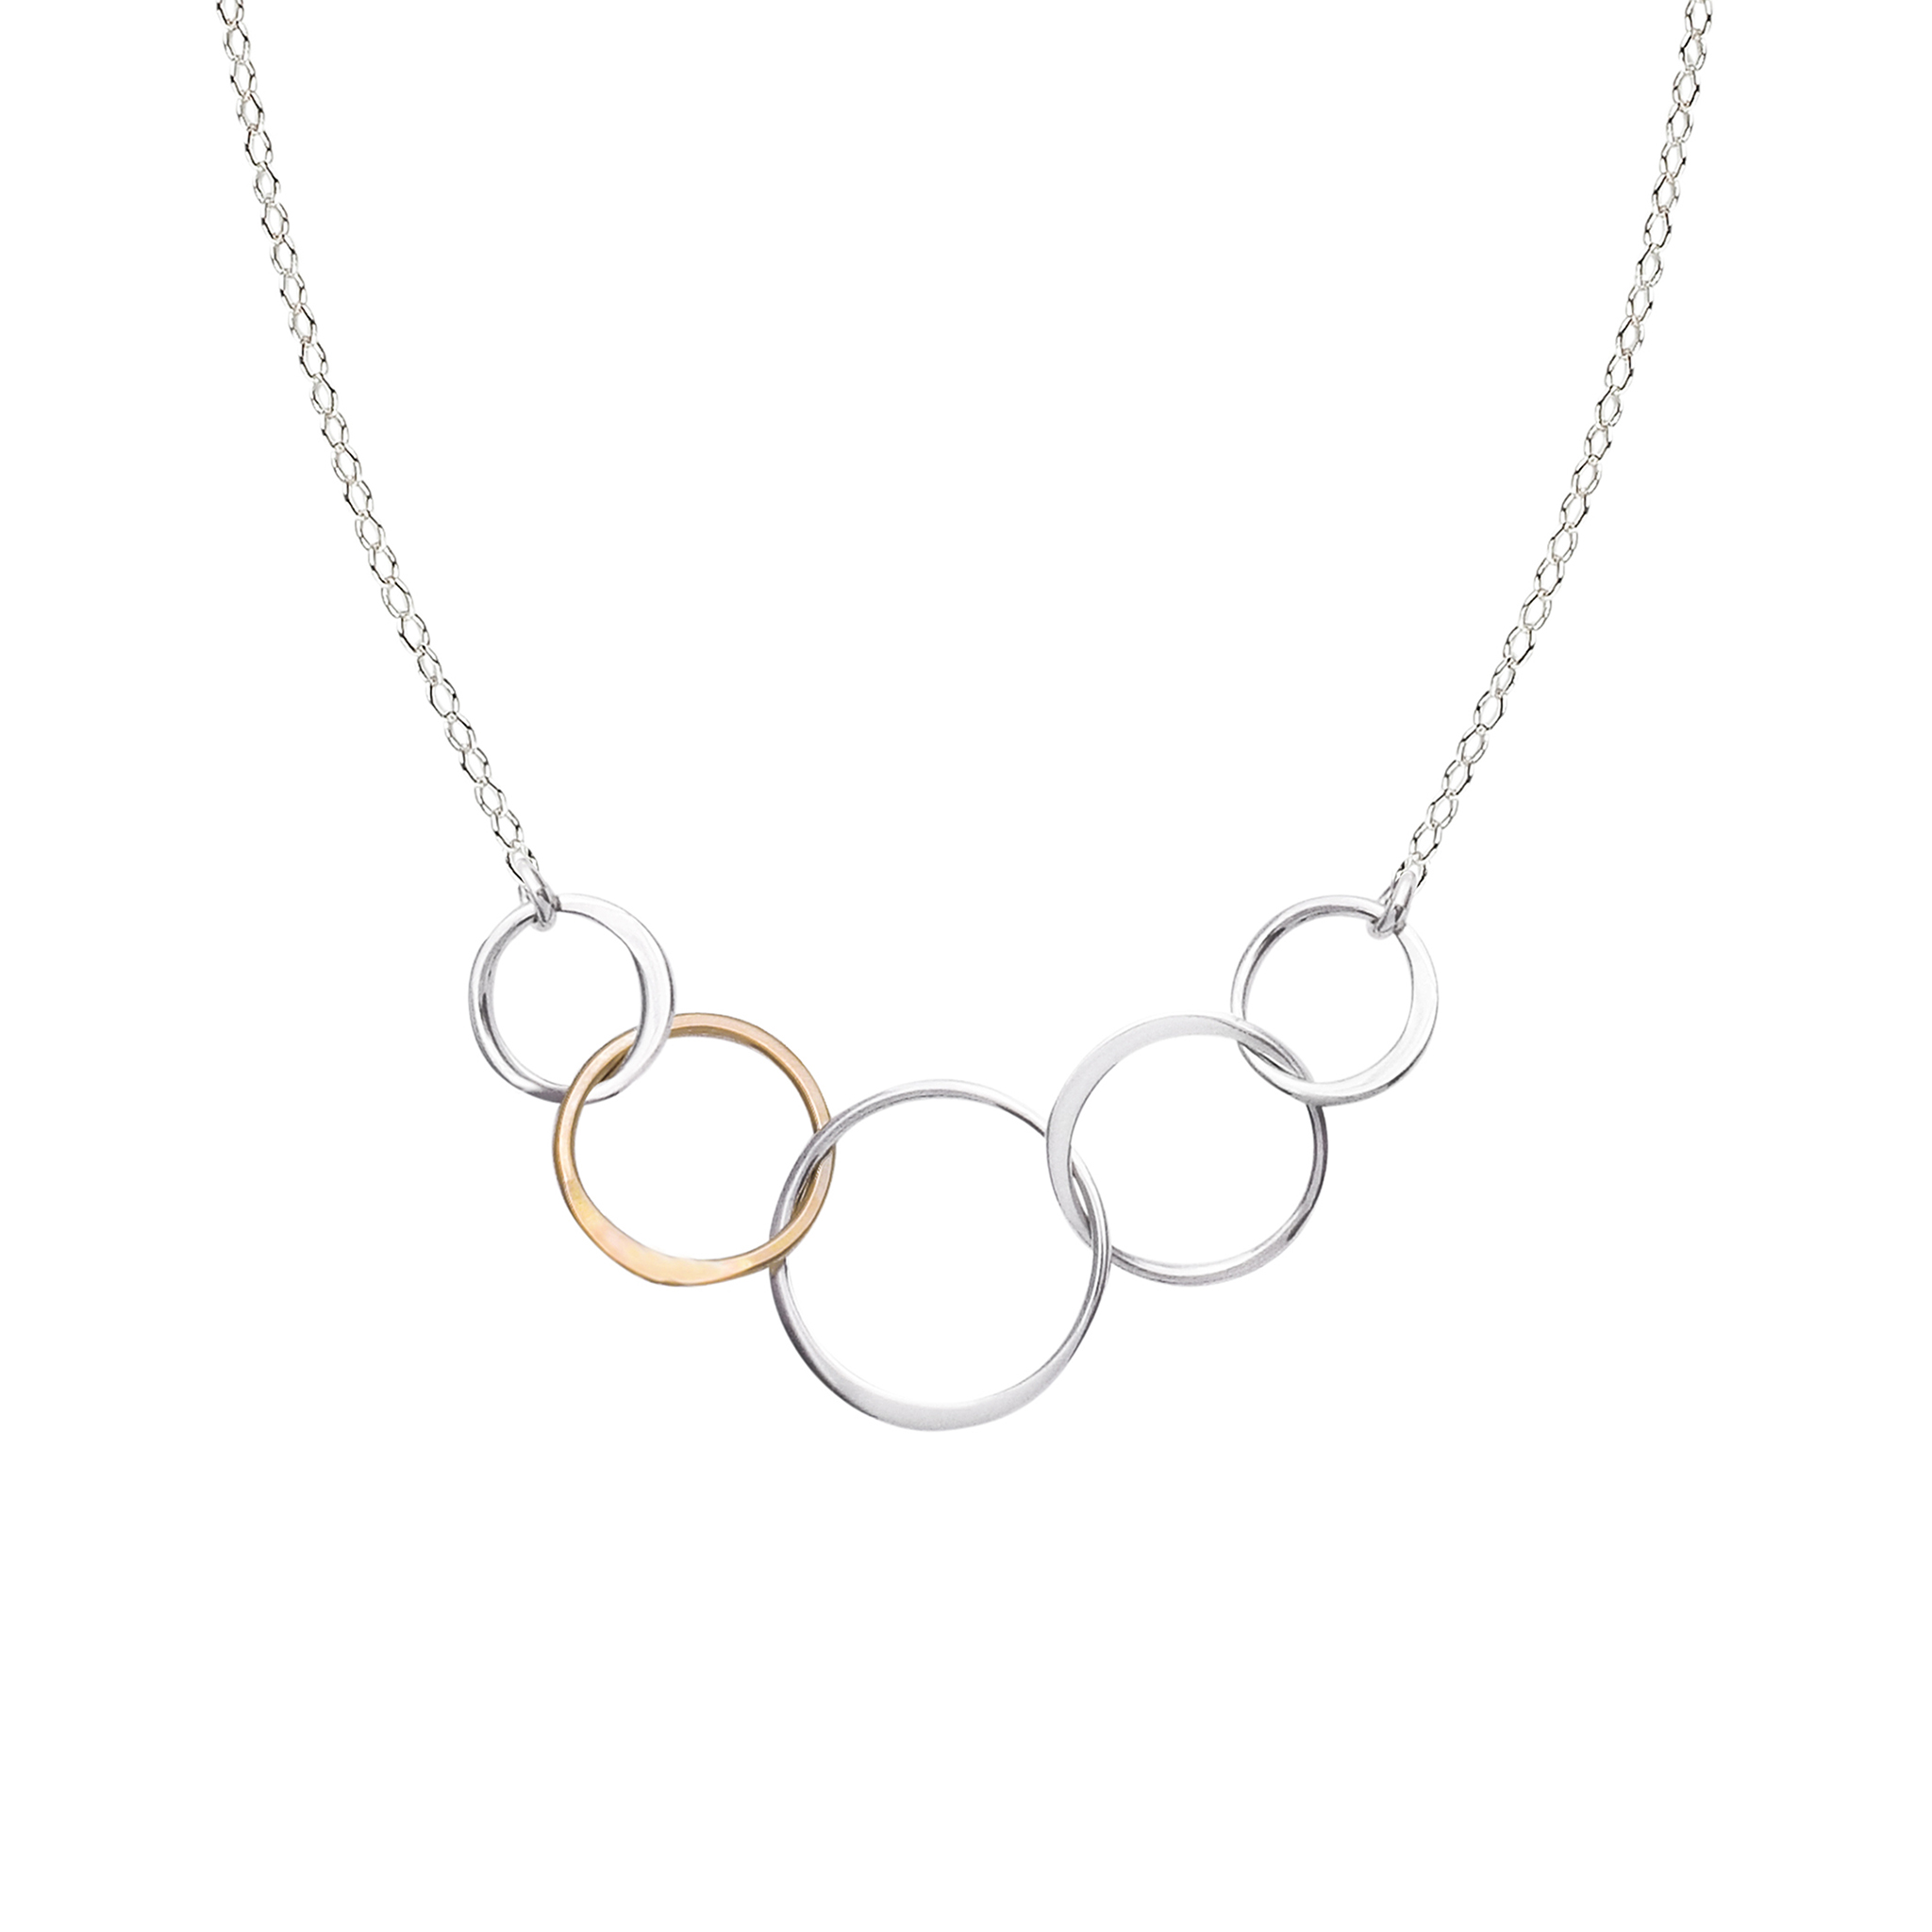 Buy Interlocking Circle Necklace, Circle Necklace Sterling Silver, Silver  Circle Necklace, Hammered Circles, Three Circles Necklace Online in India -  Etsy